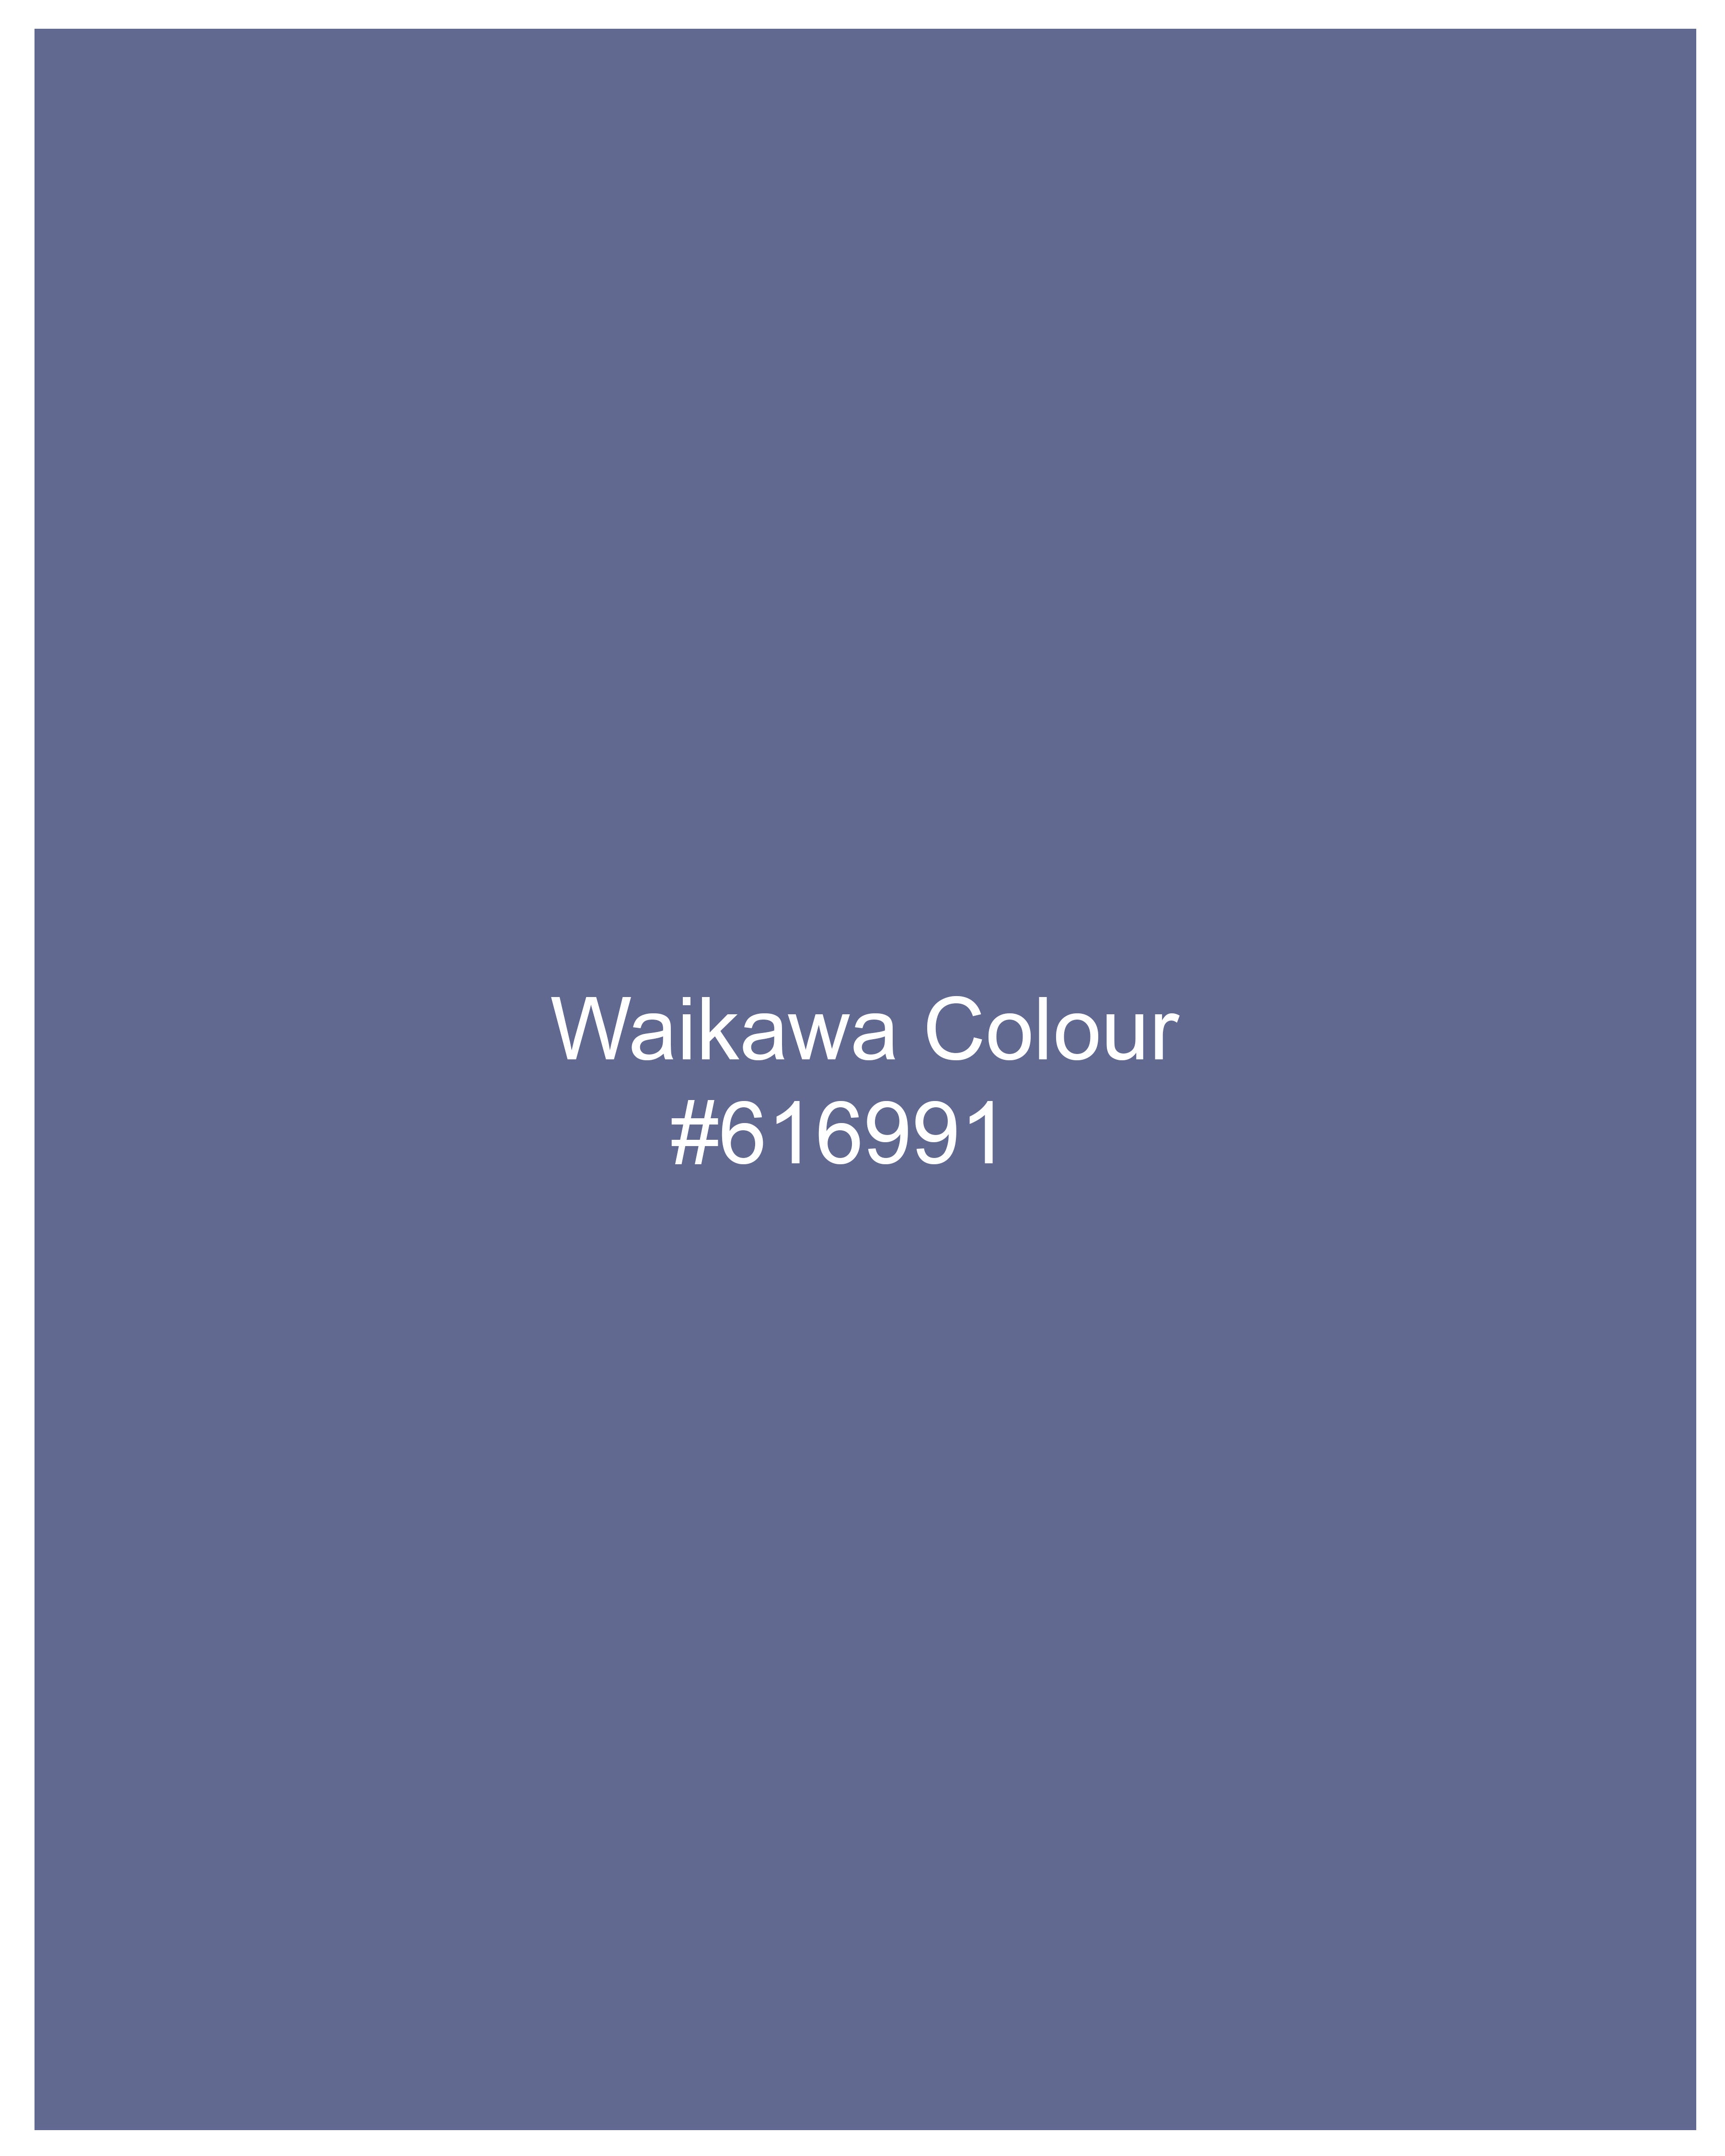 Waikawa Blue Embroidered Dobby Textured Premium Giza Cotton Shirt 7795-P146-E058-38, 7795-P146-E058-H-38, 7795-P146-E058-39, 7795-P146-E058-H-39, 7795-P146-E058-40, 7795-P146-E058-H-40, 7795-P146-E058-42, 7795-P146-E058-H-42, 7795-P146-E058-44, 7795-P146-E058-H-44, 7795-P146-E058-46, 7795-P146-E058-H-46, 7795-P146-E058-48, 7795-P146-E058-H-48, 7795-P146-E058-50, 7795-P146-E058-H-50, 7795-P146-E058-52, 7795-P146-E058-H-52